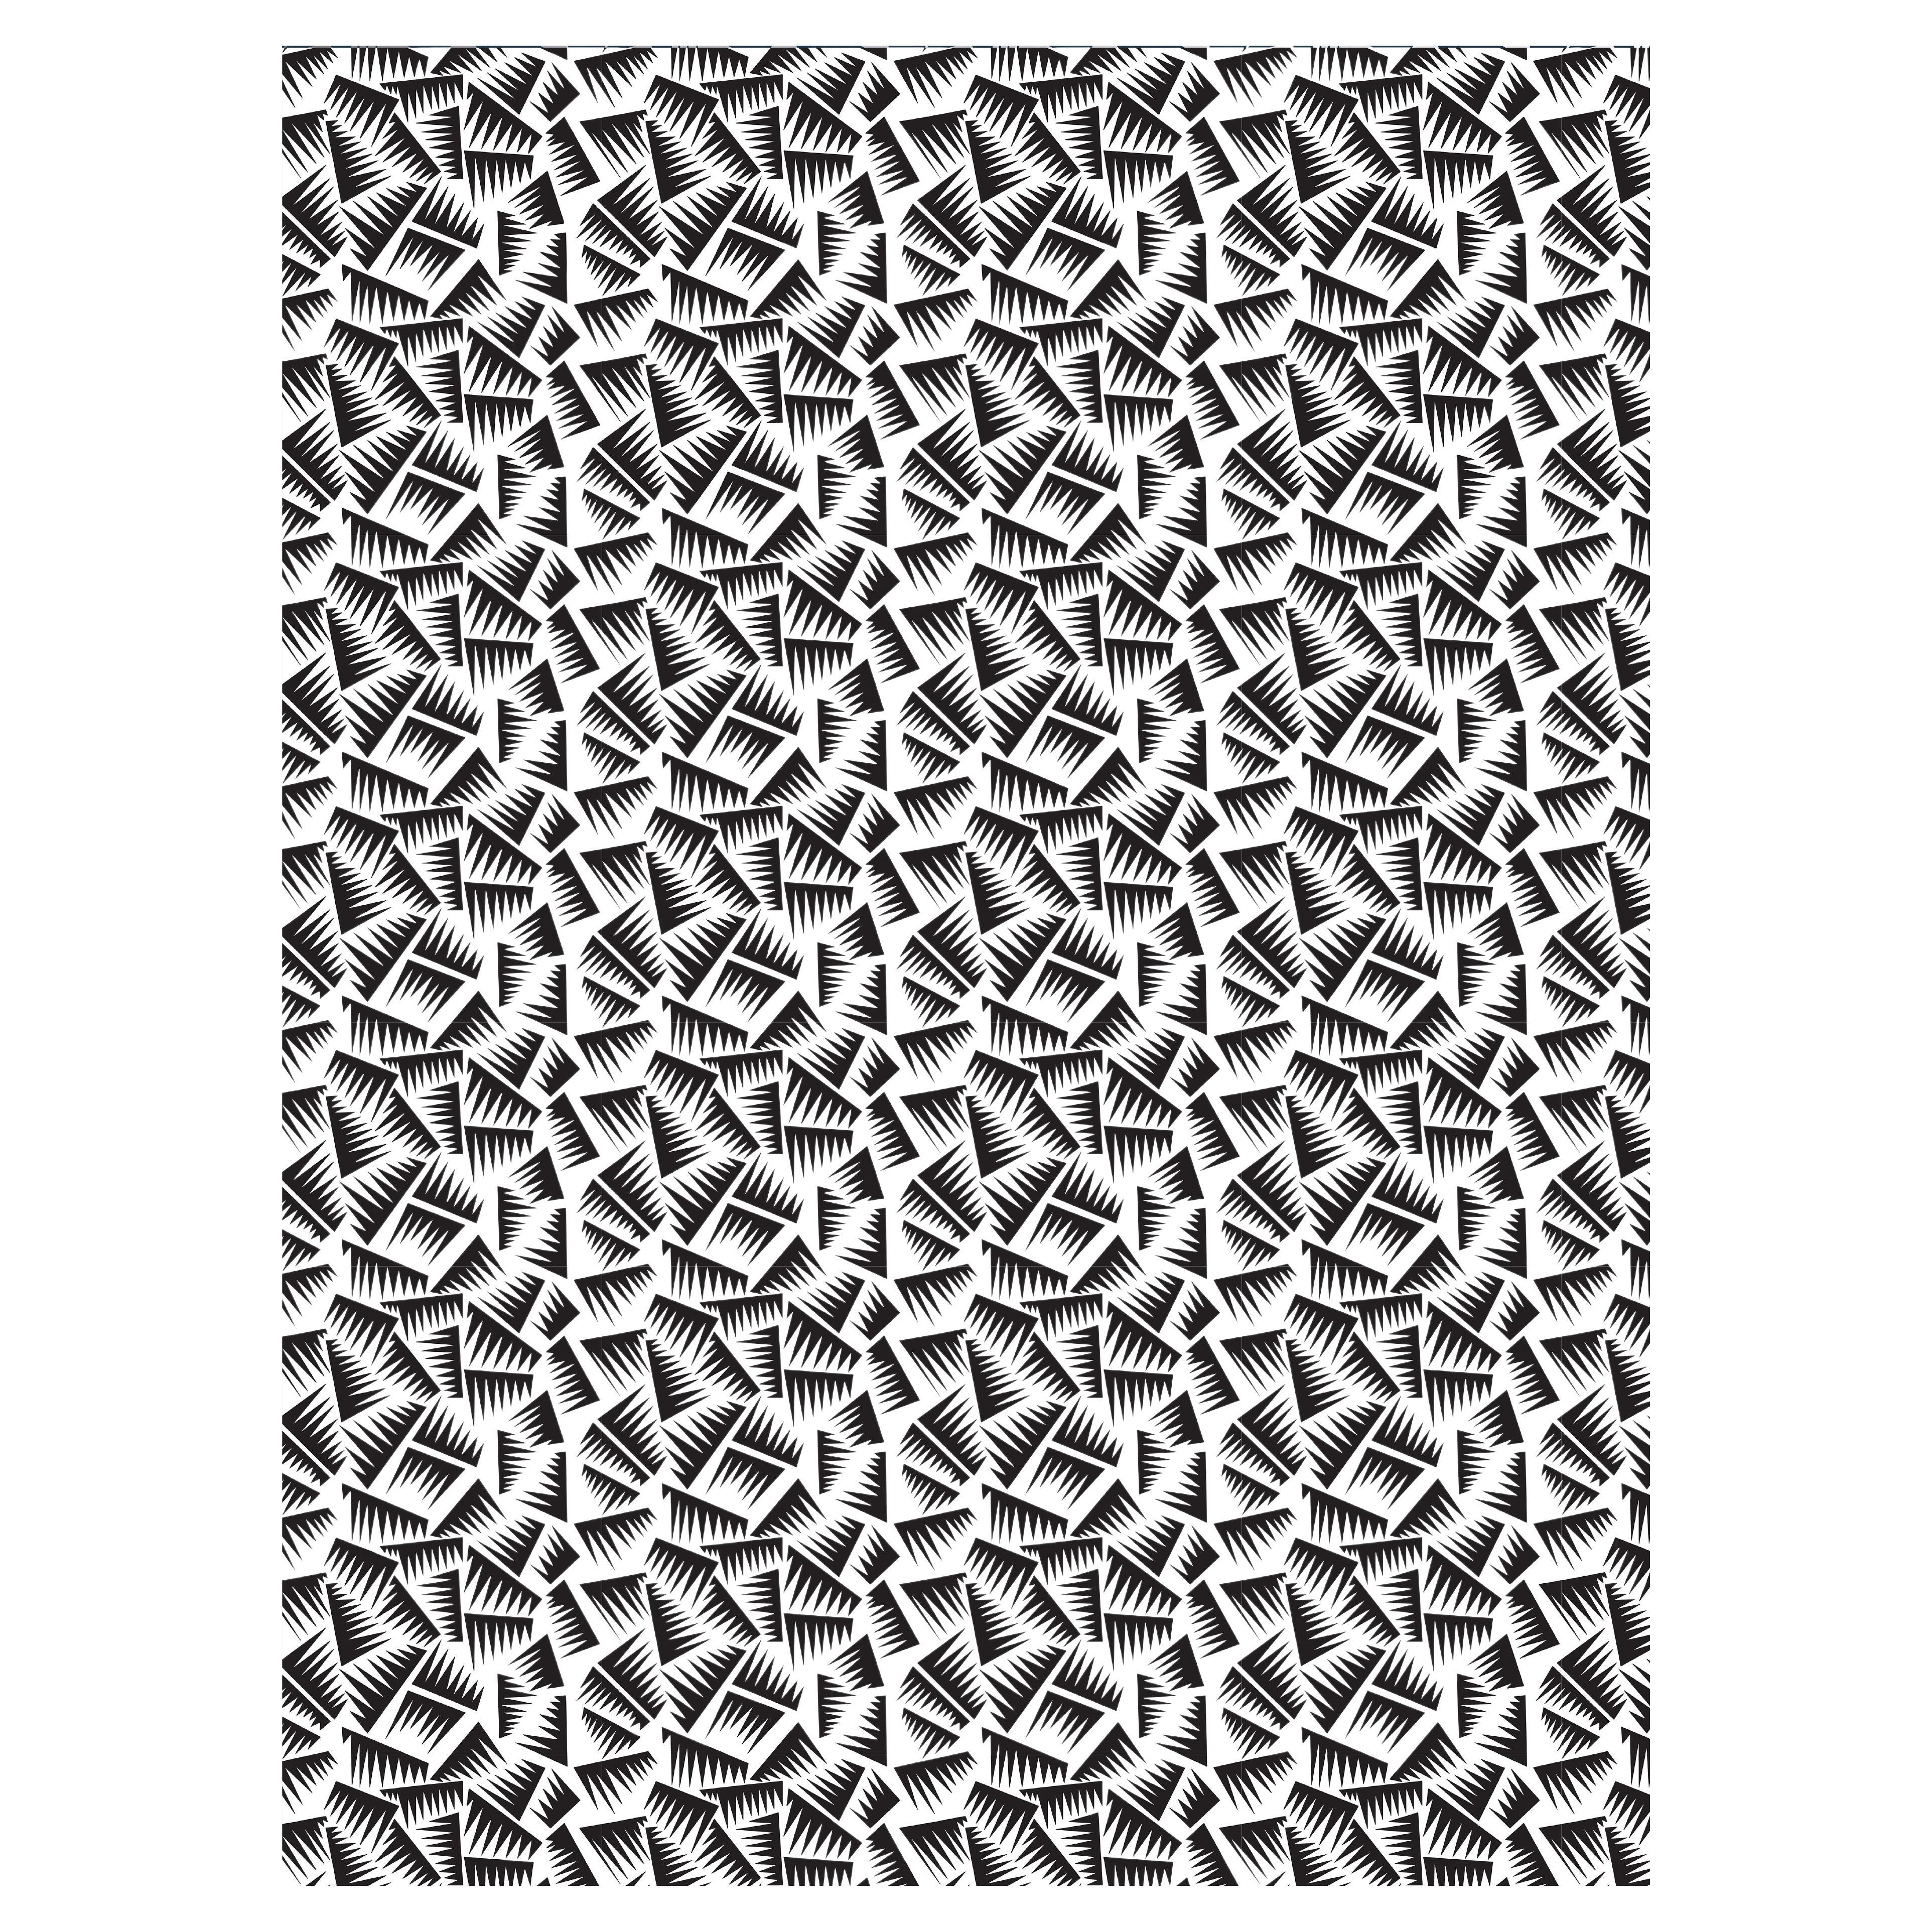 JER Wallpaper - Black&White by Jacques-Emile Ruhlmann for La Chance